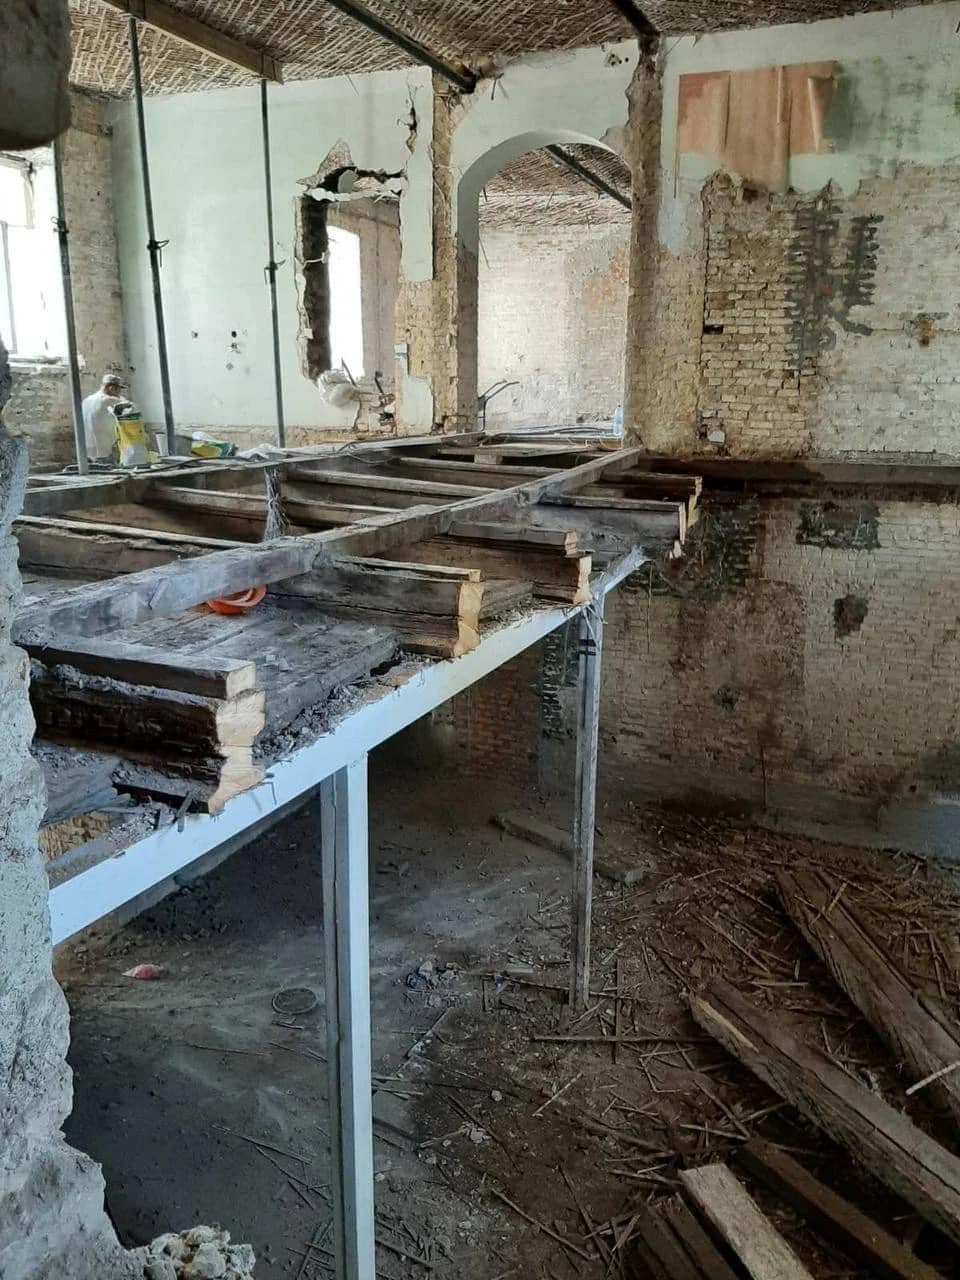 Києво-Могилянську академію вдруге оштрафували за незаконну реконструкцію Братських келій